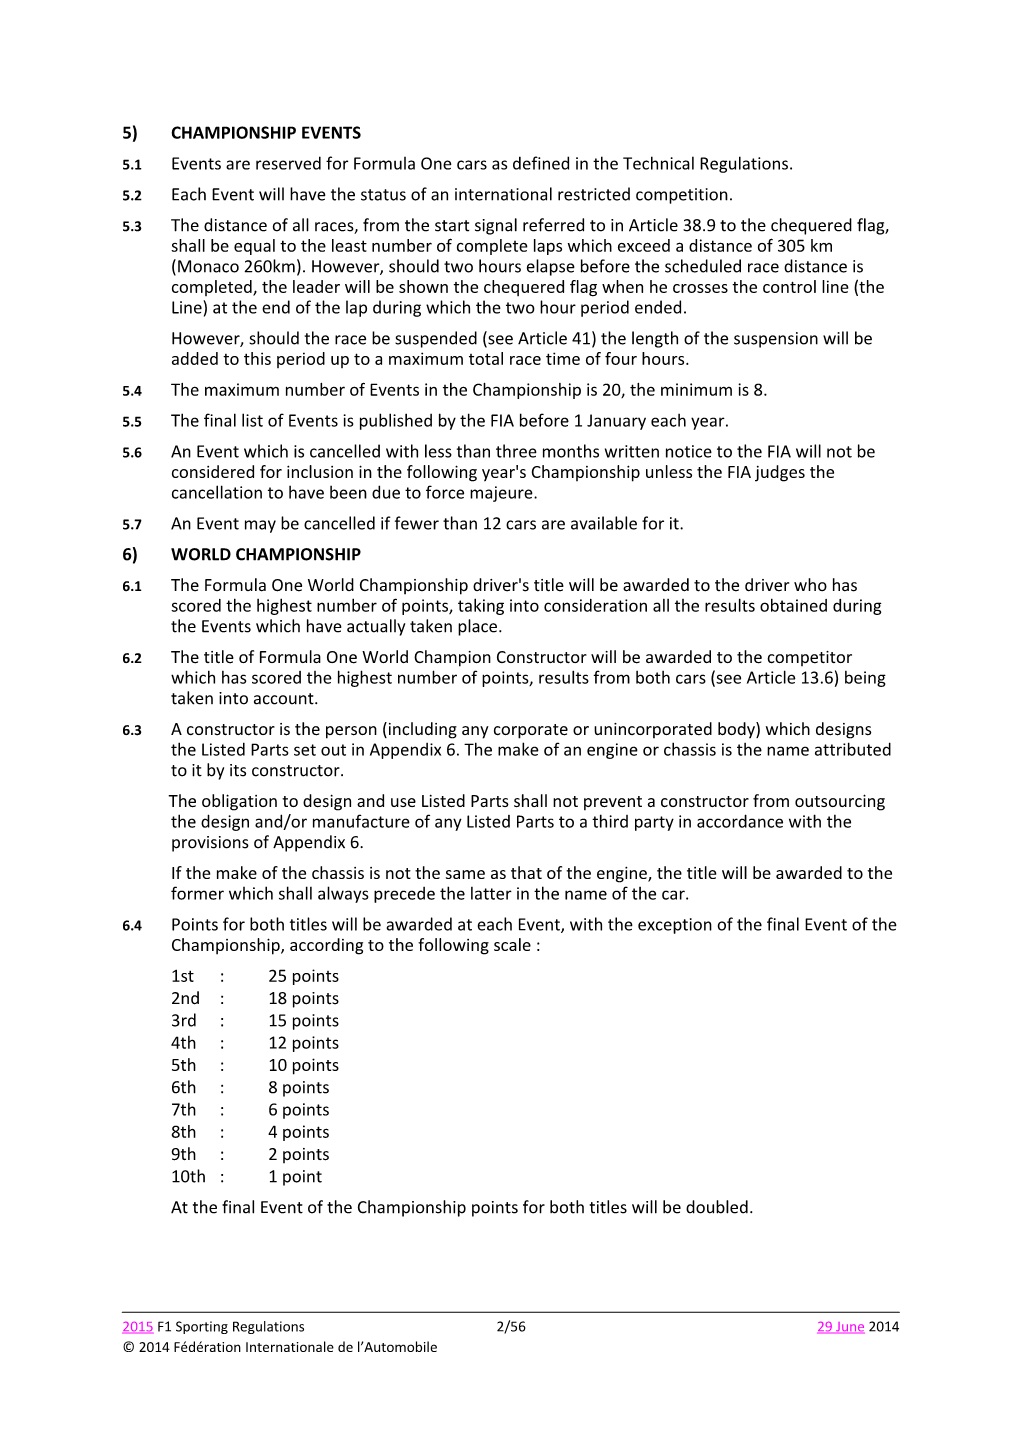 Draft 1999 F1 Sporting Regulations